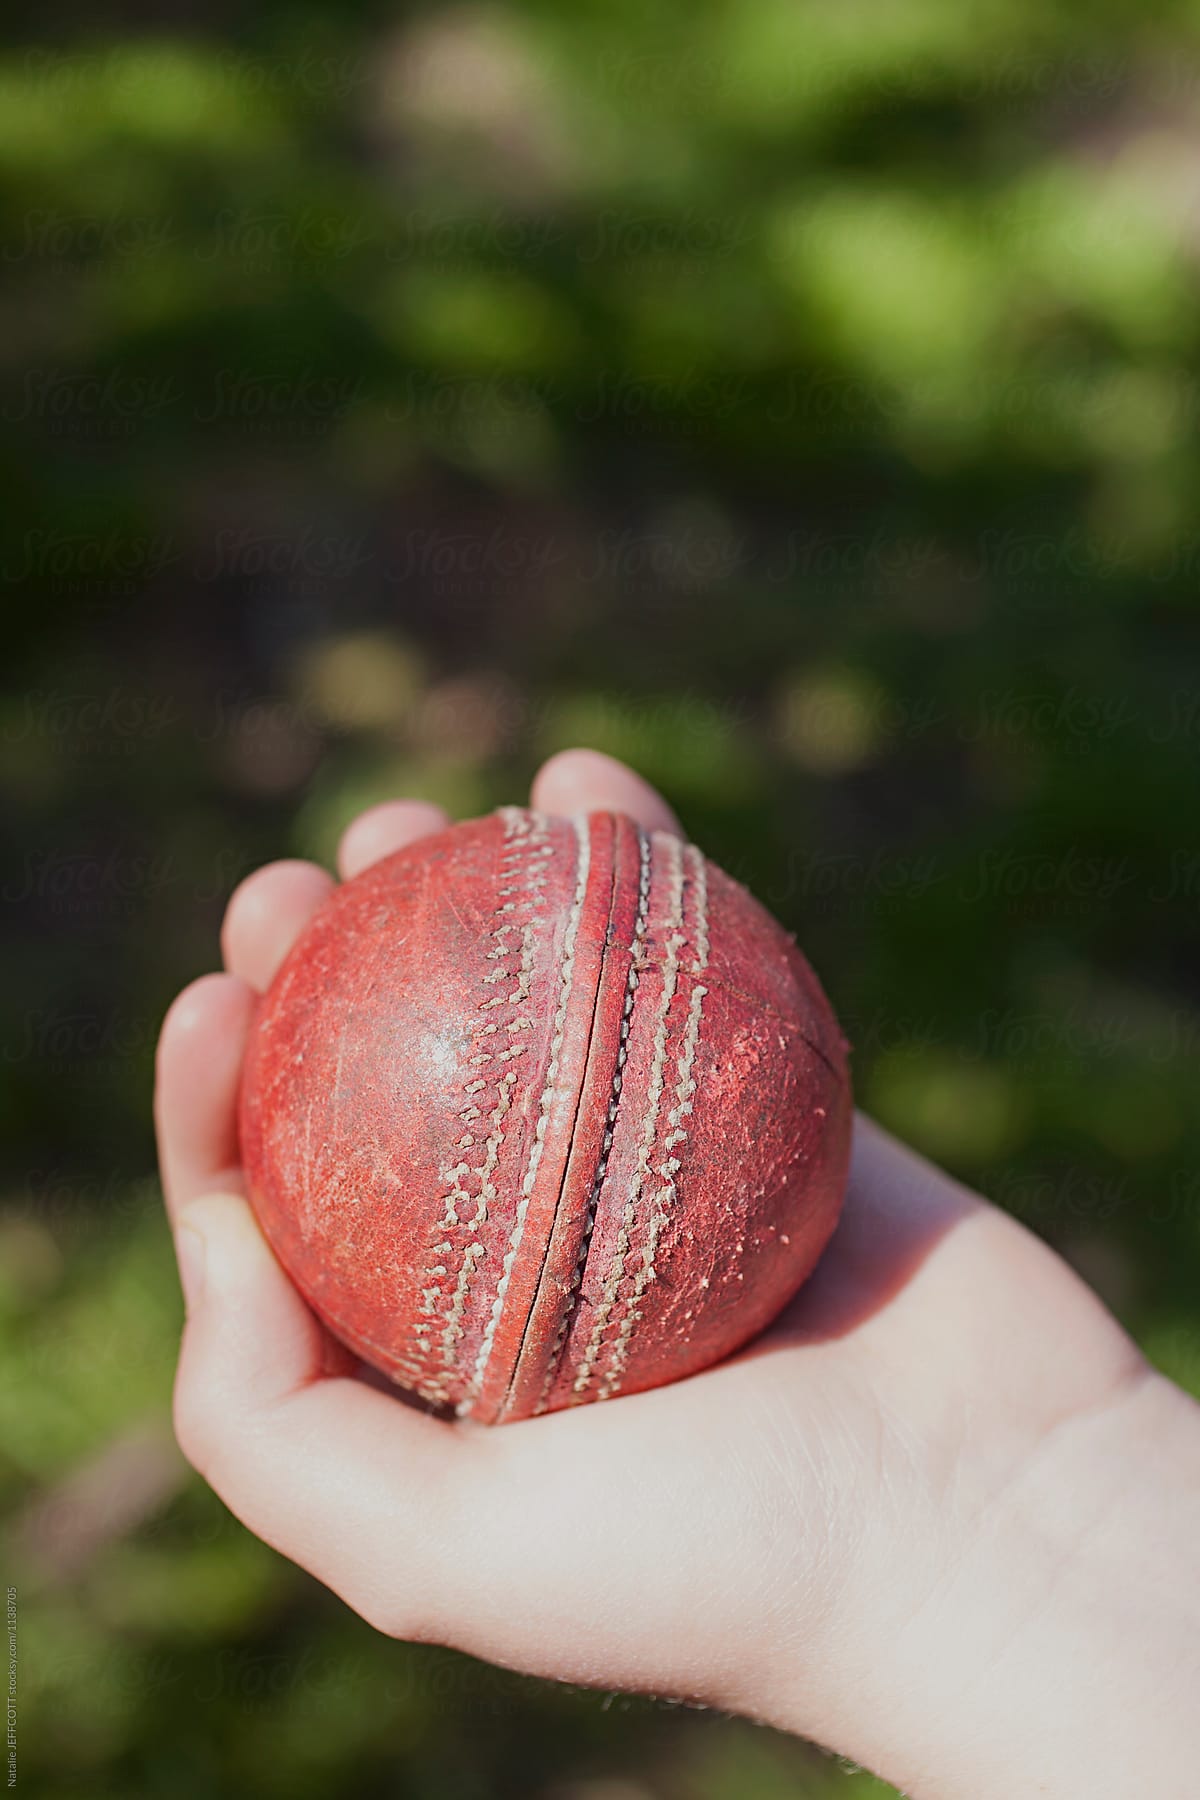 backyard cricket in Australia - hand holding ball